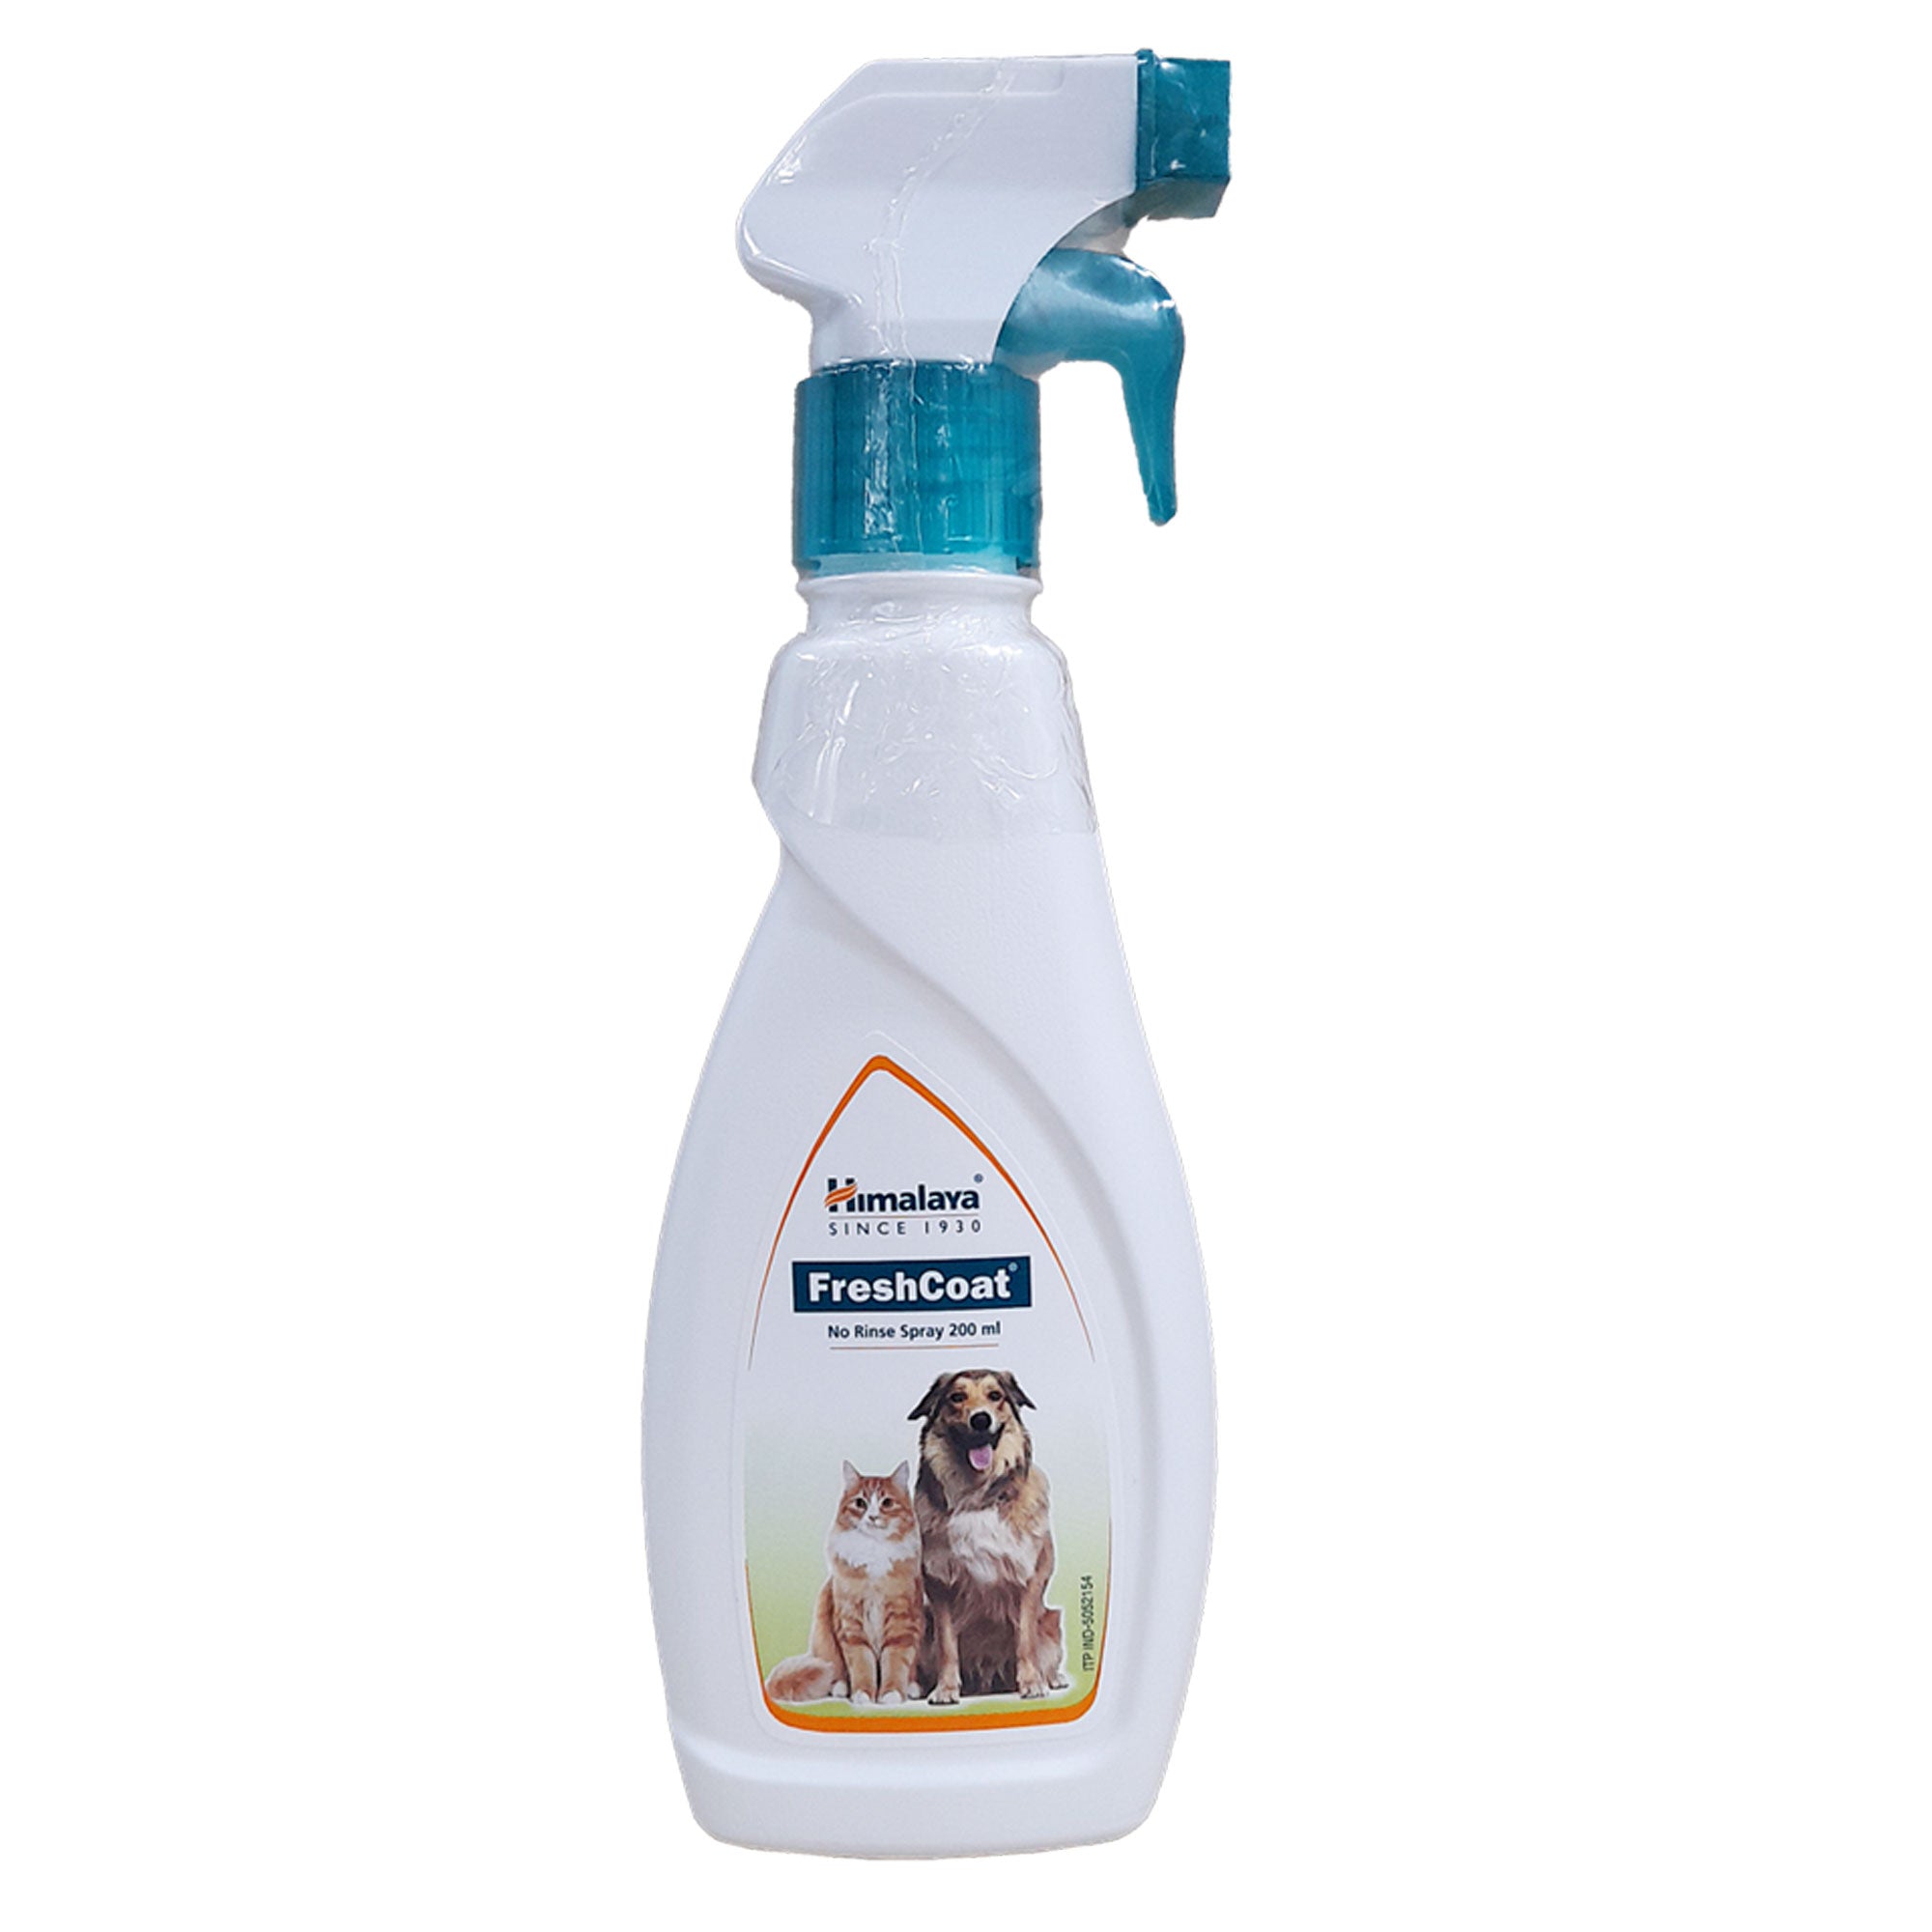 Himalaya FreshCoat 200ml - No rinse spray for pets